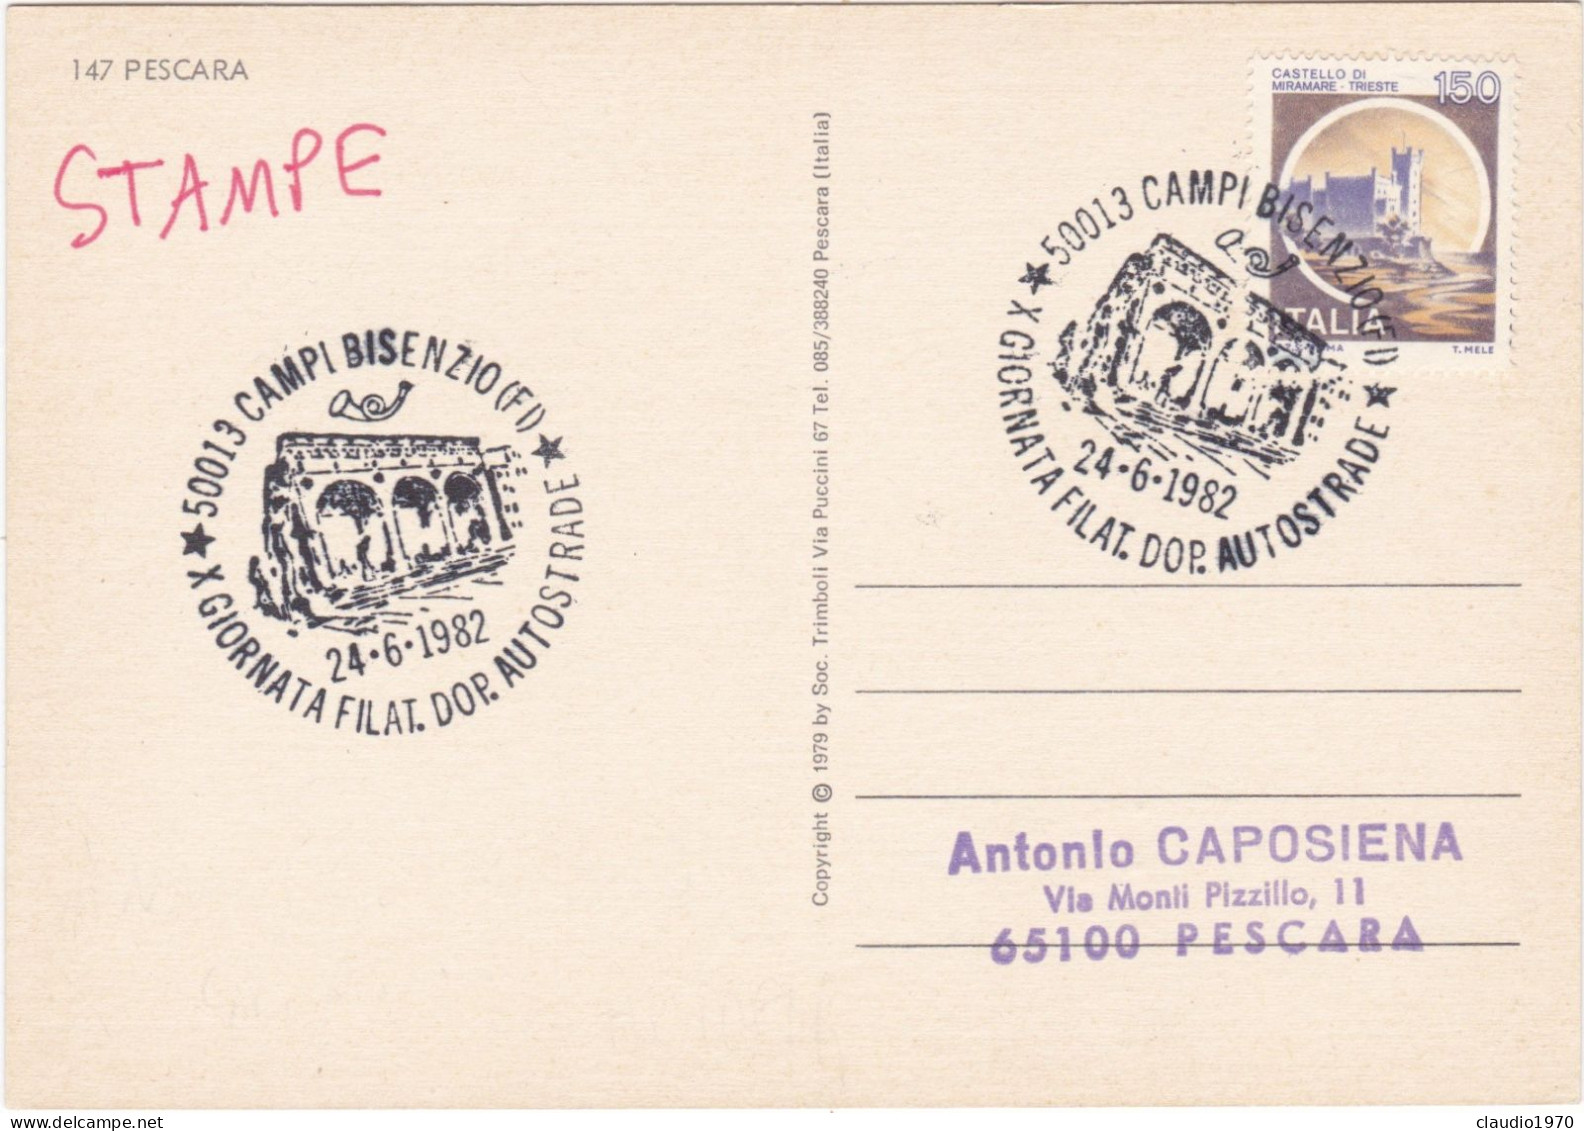 PESCARA - CARTOLINA - SALUTO DA PESCARA - - ANNULLO DI CAMPI BISENZIO (FI) -1982 - Pescara